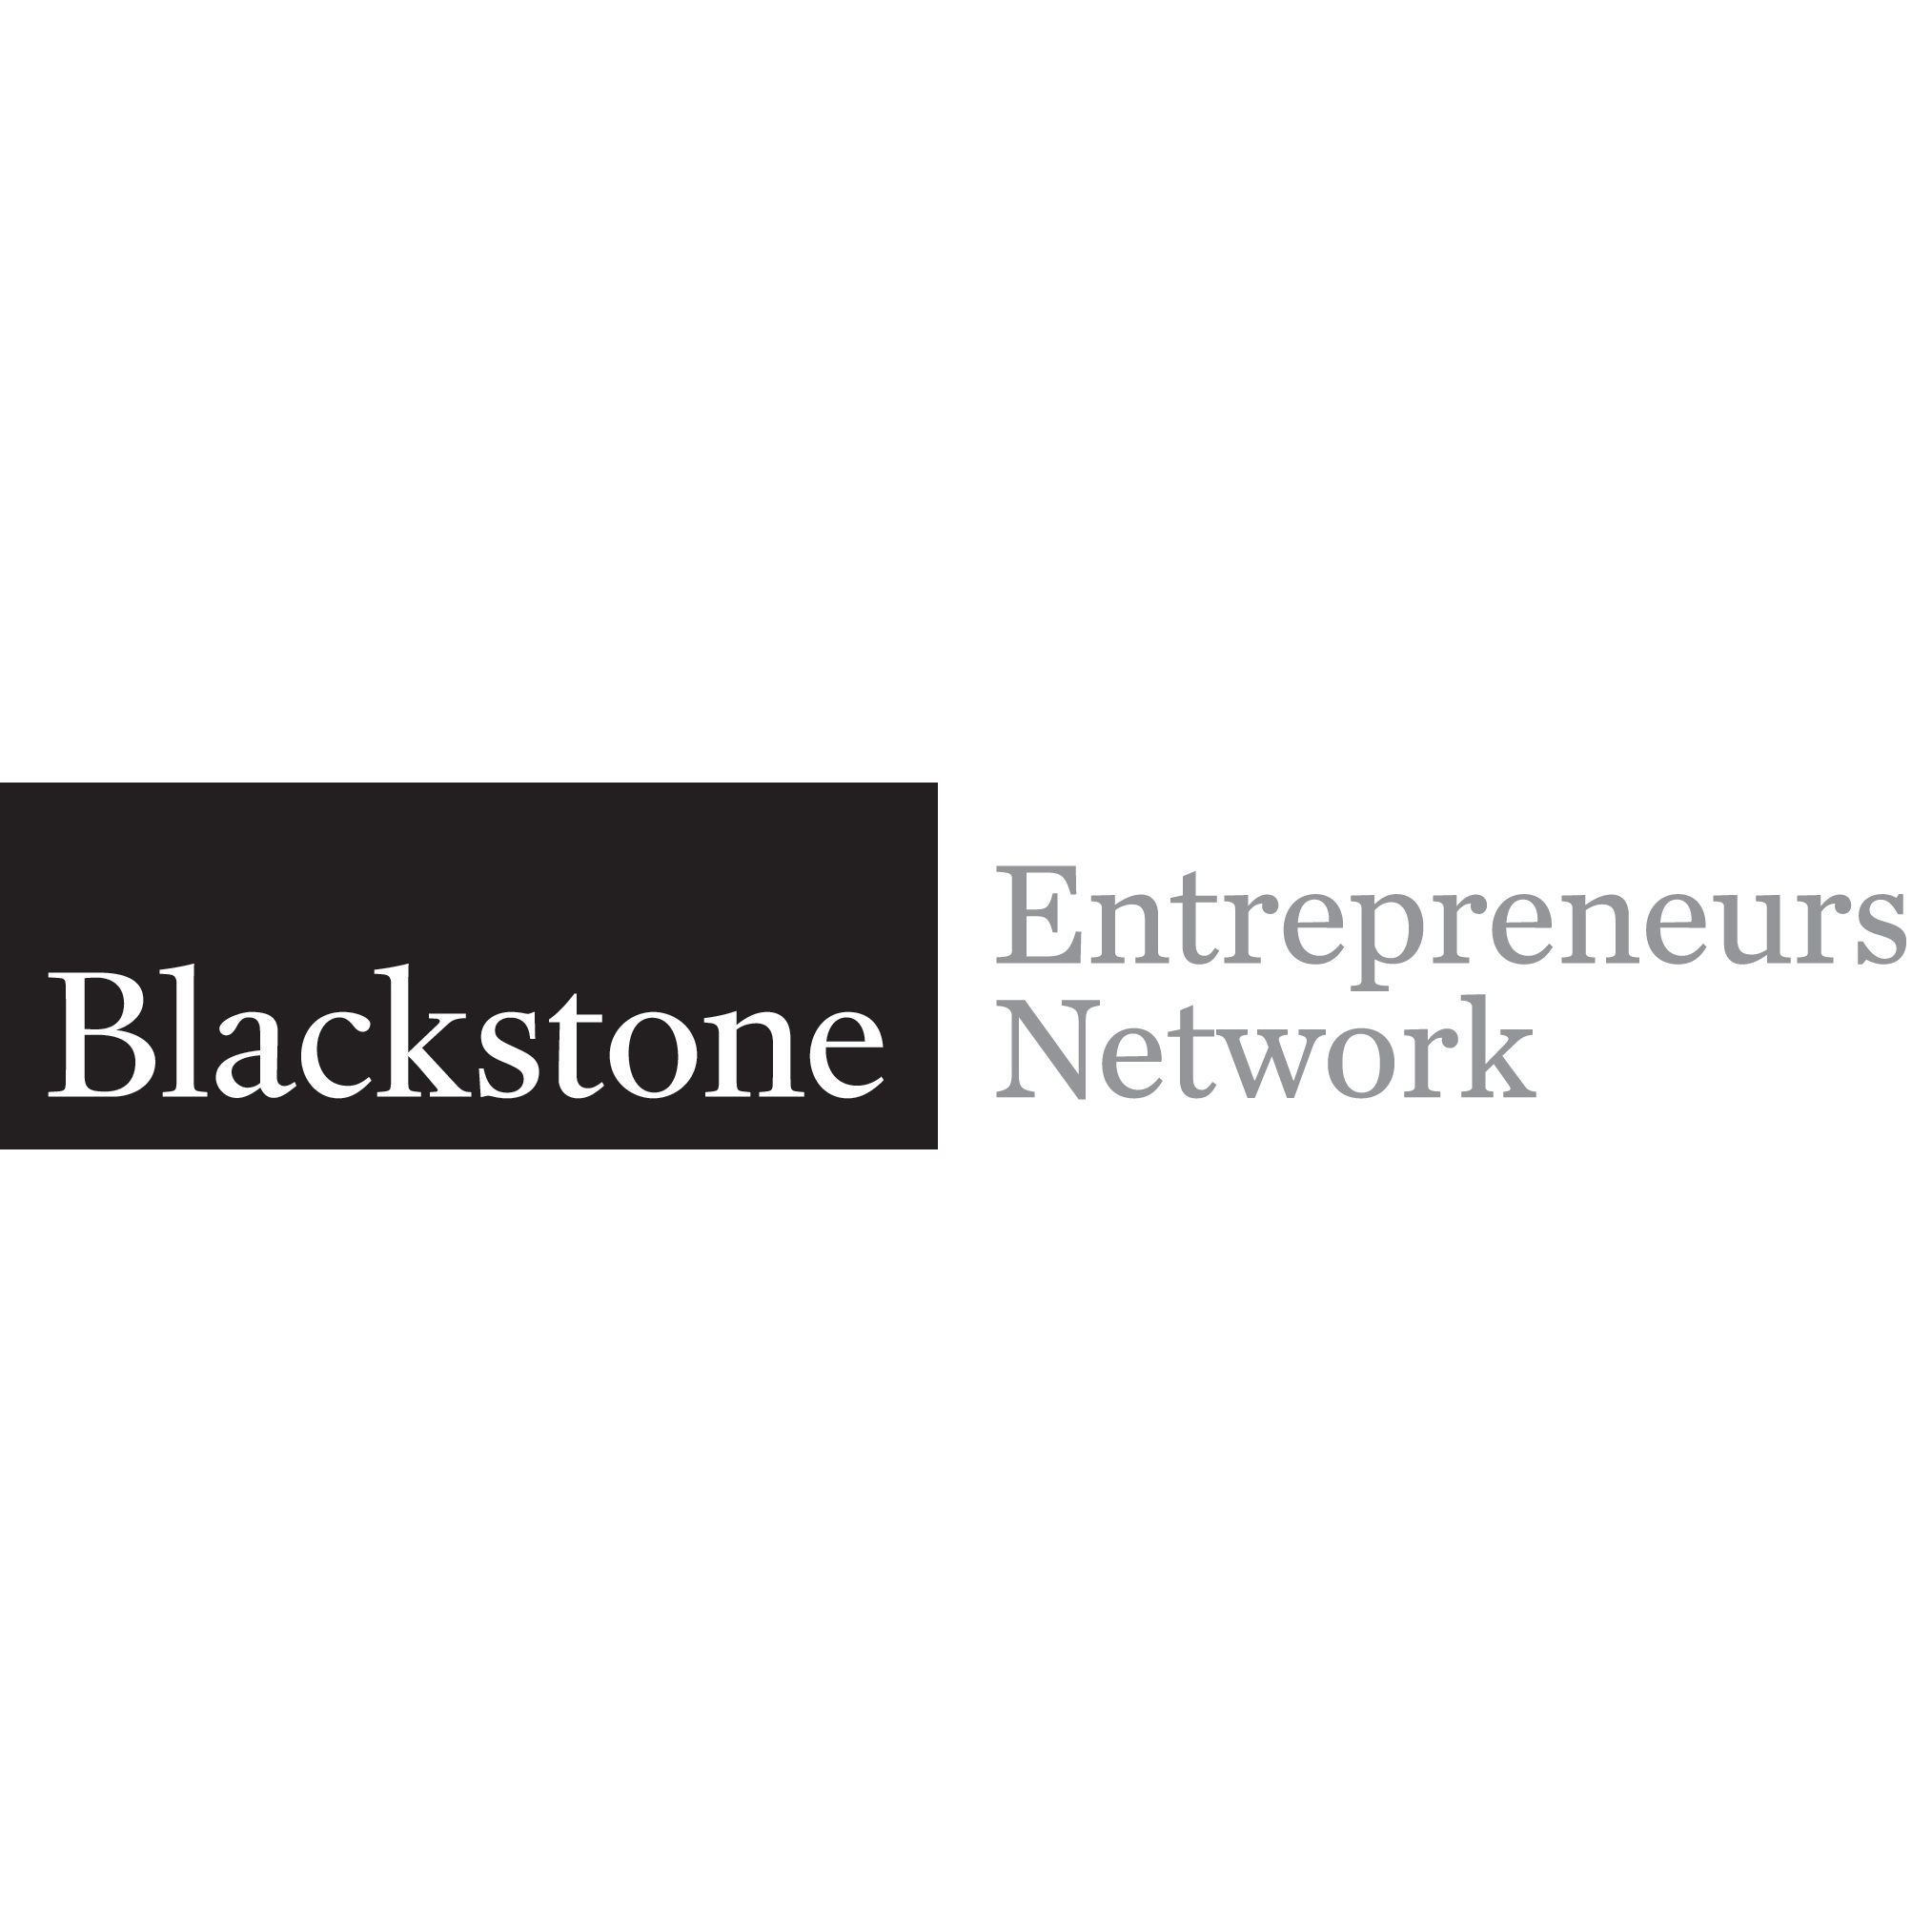 Blackstone Entrepreneurs Network